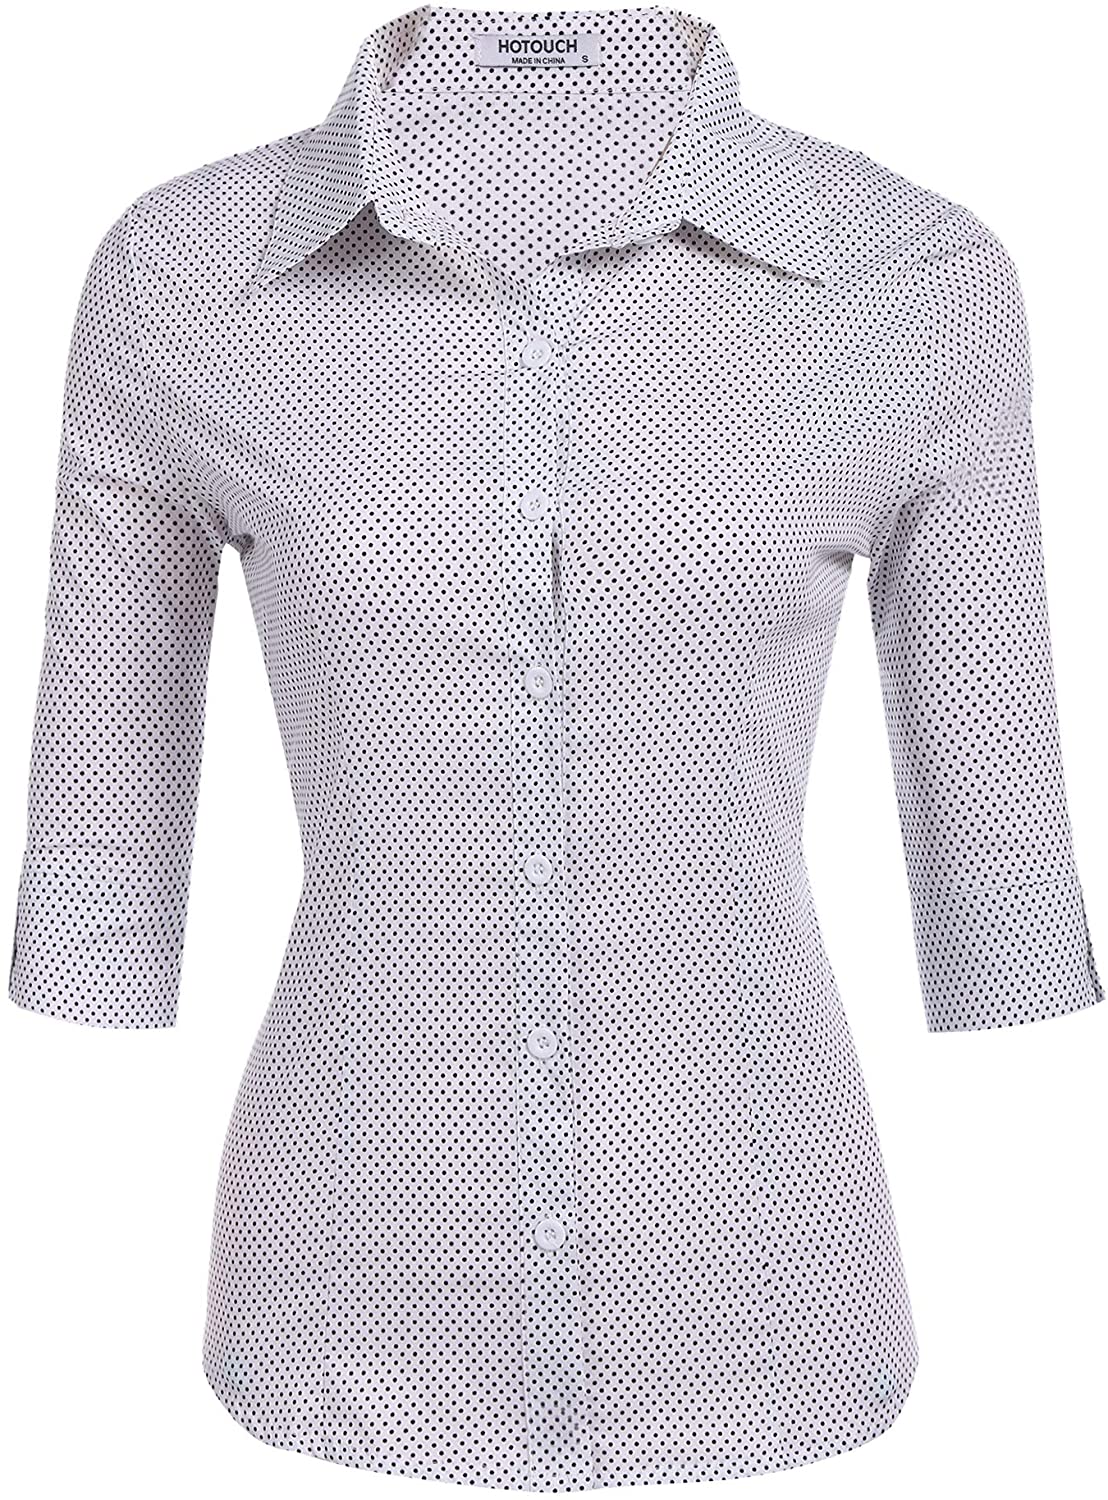 Hotouch Womens 3/4 Sleeve Basic Button Down Shirt Slim Fit Cotton Dress Shirts 